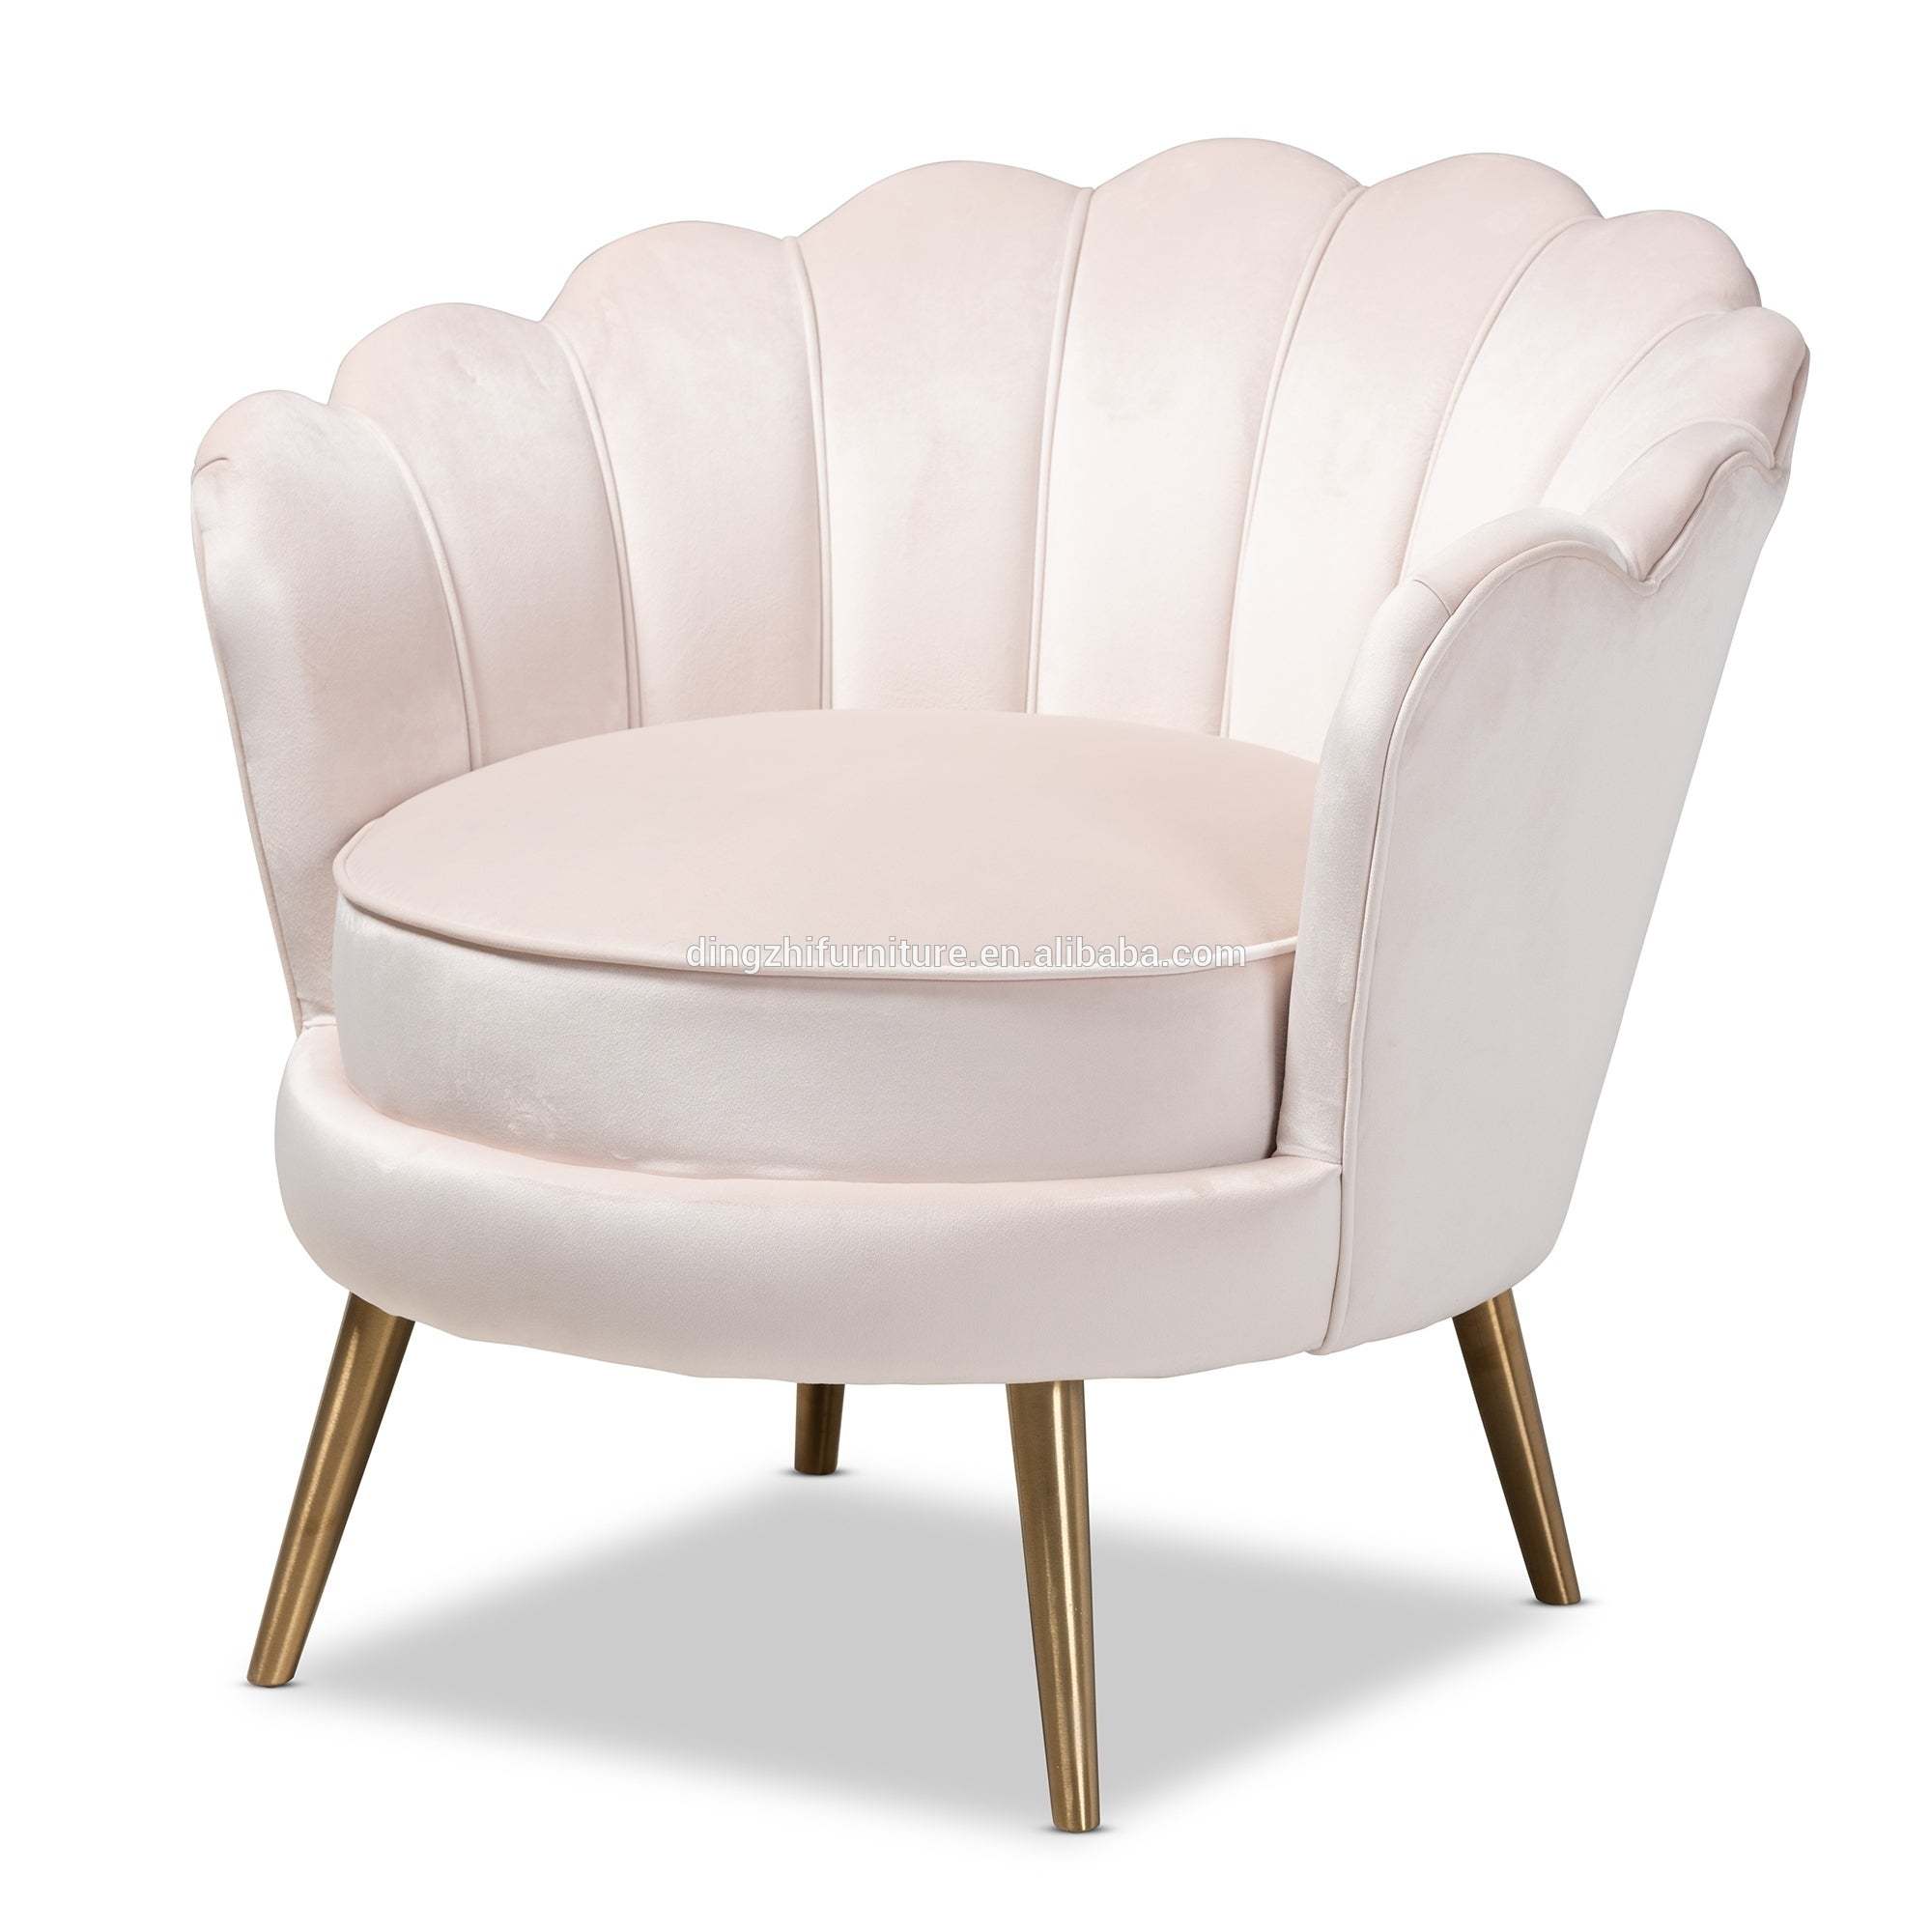 Small Chaise Sofa DINGZHI Furniture Wholesale - Kingbird Furniture Company 18